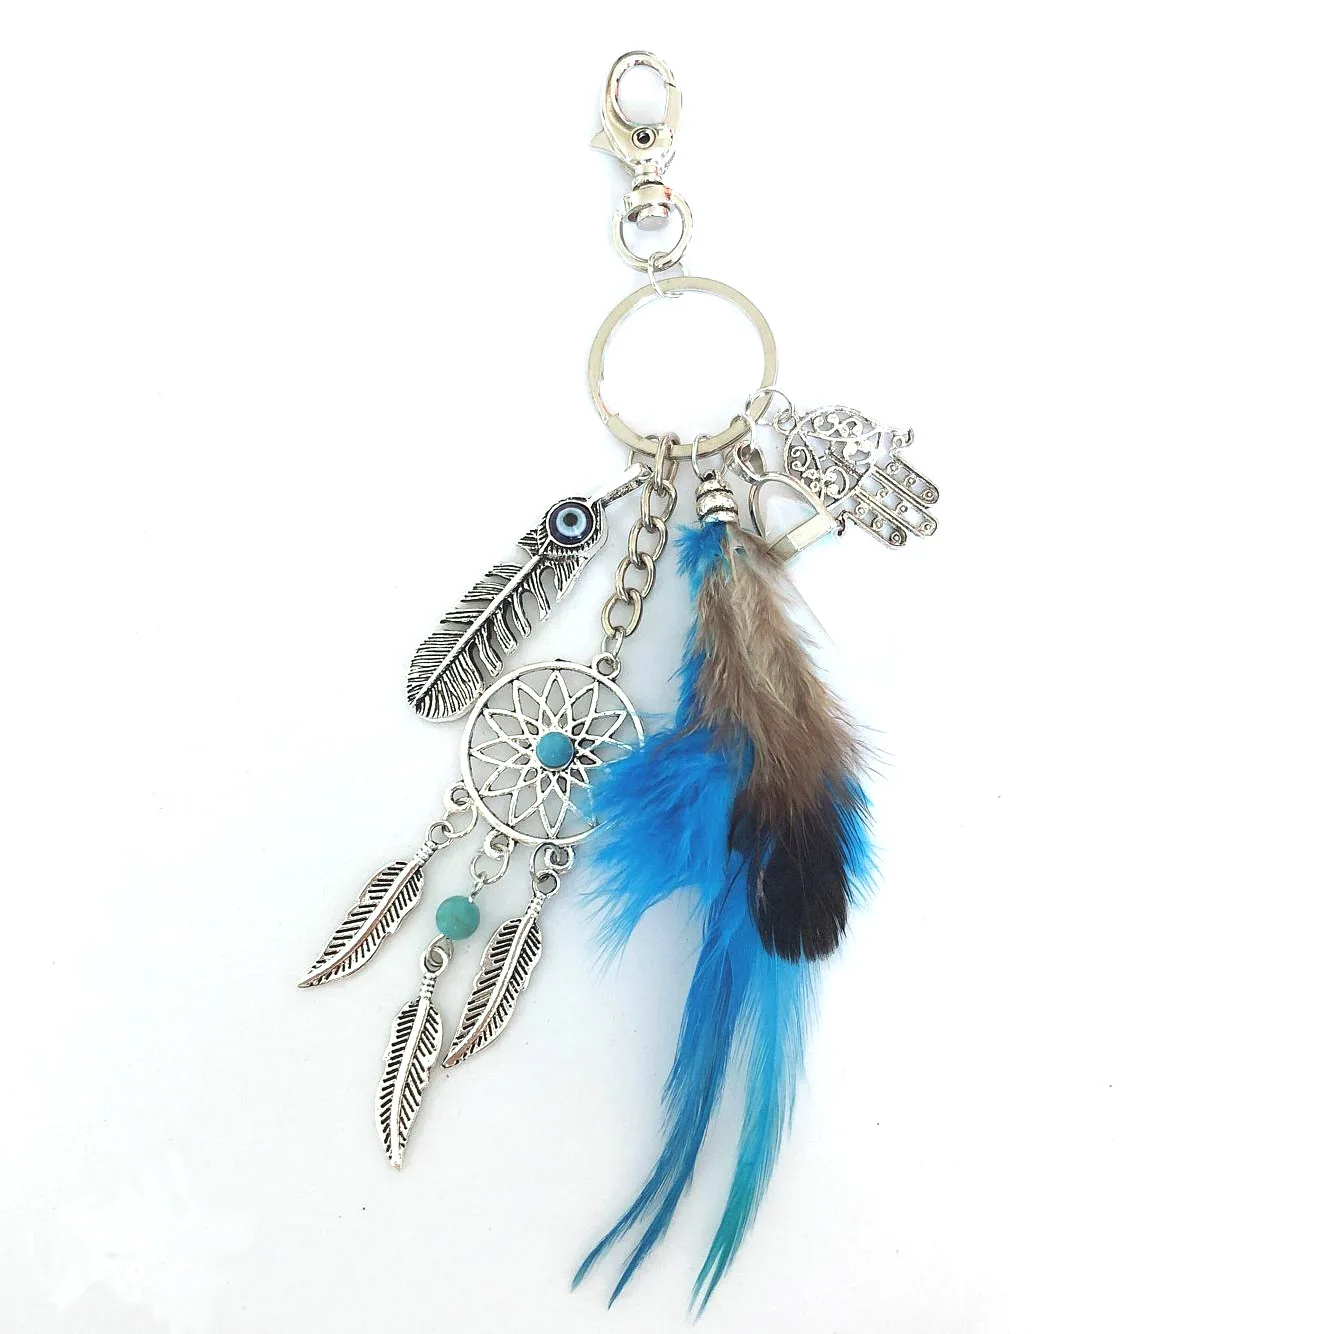 Feather Dream Catcher Keyring Keychain Car Bag Hanging Pendant Dreamcatcher Gift 